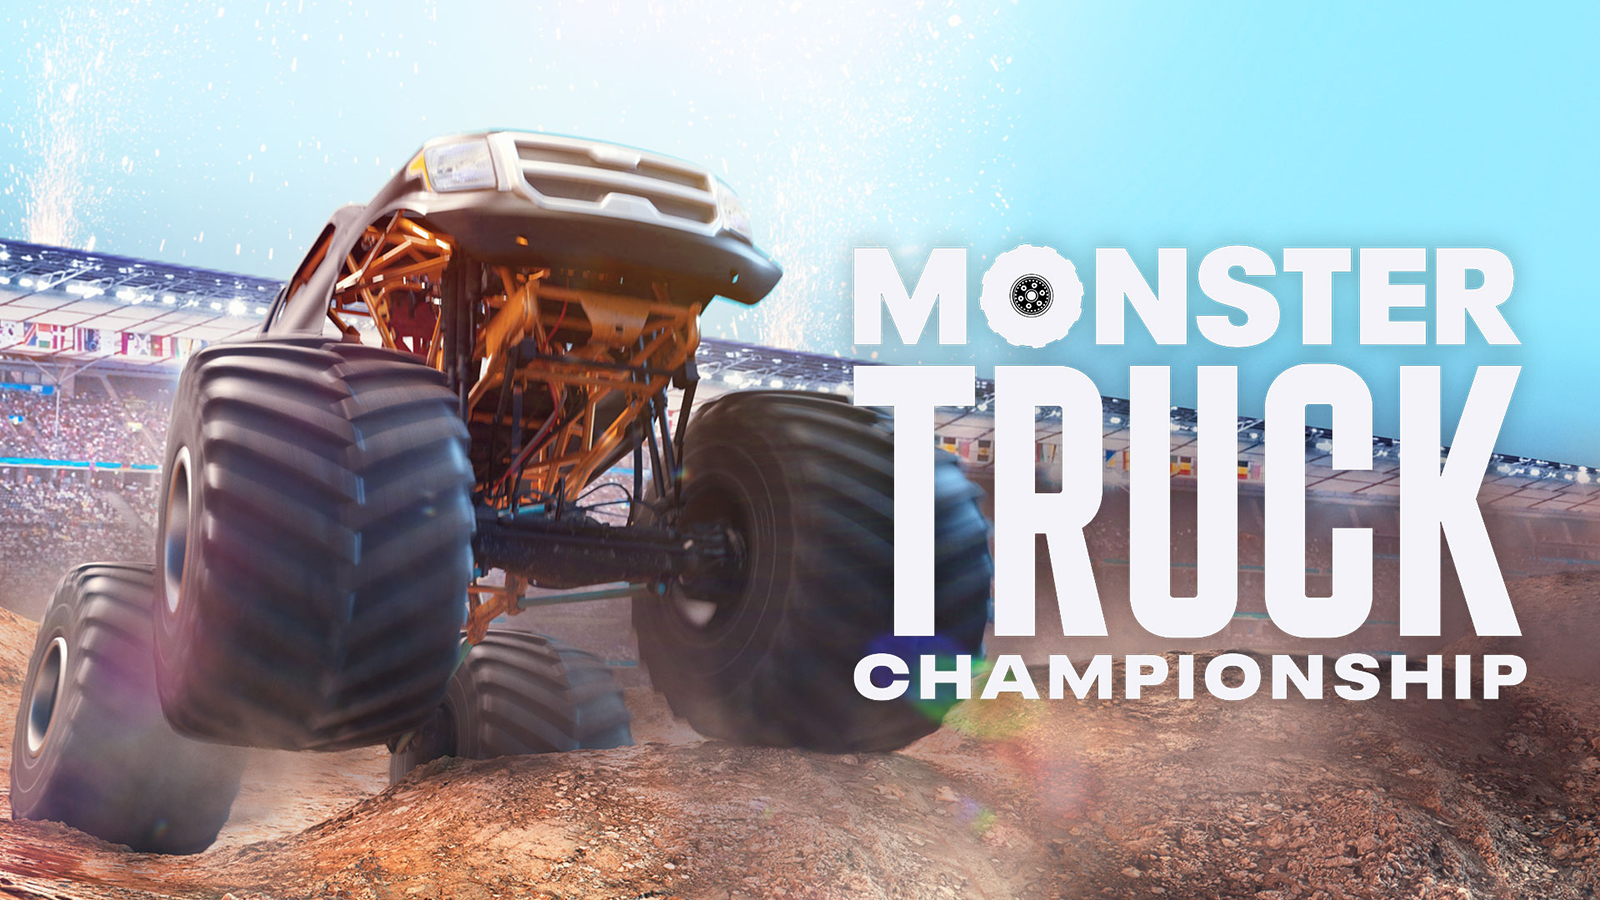 Monster Truck Championship banner.jpeg